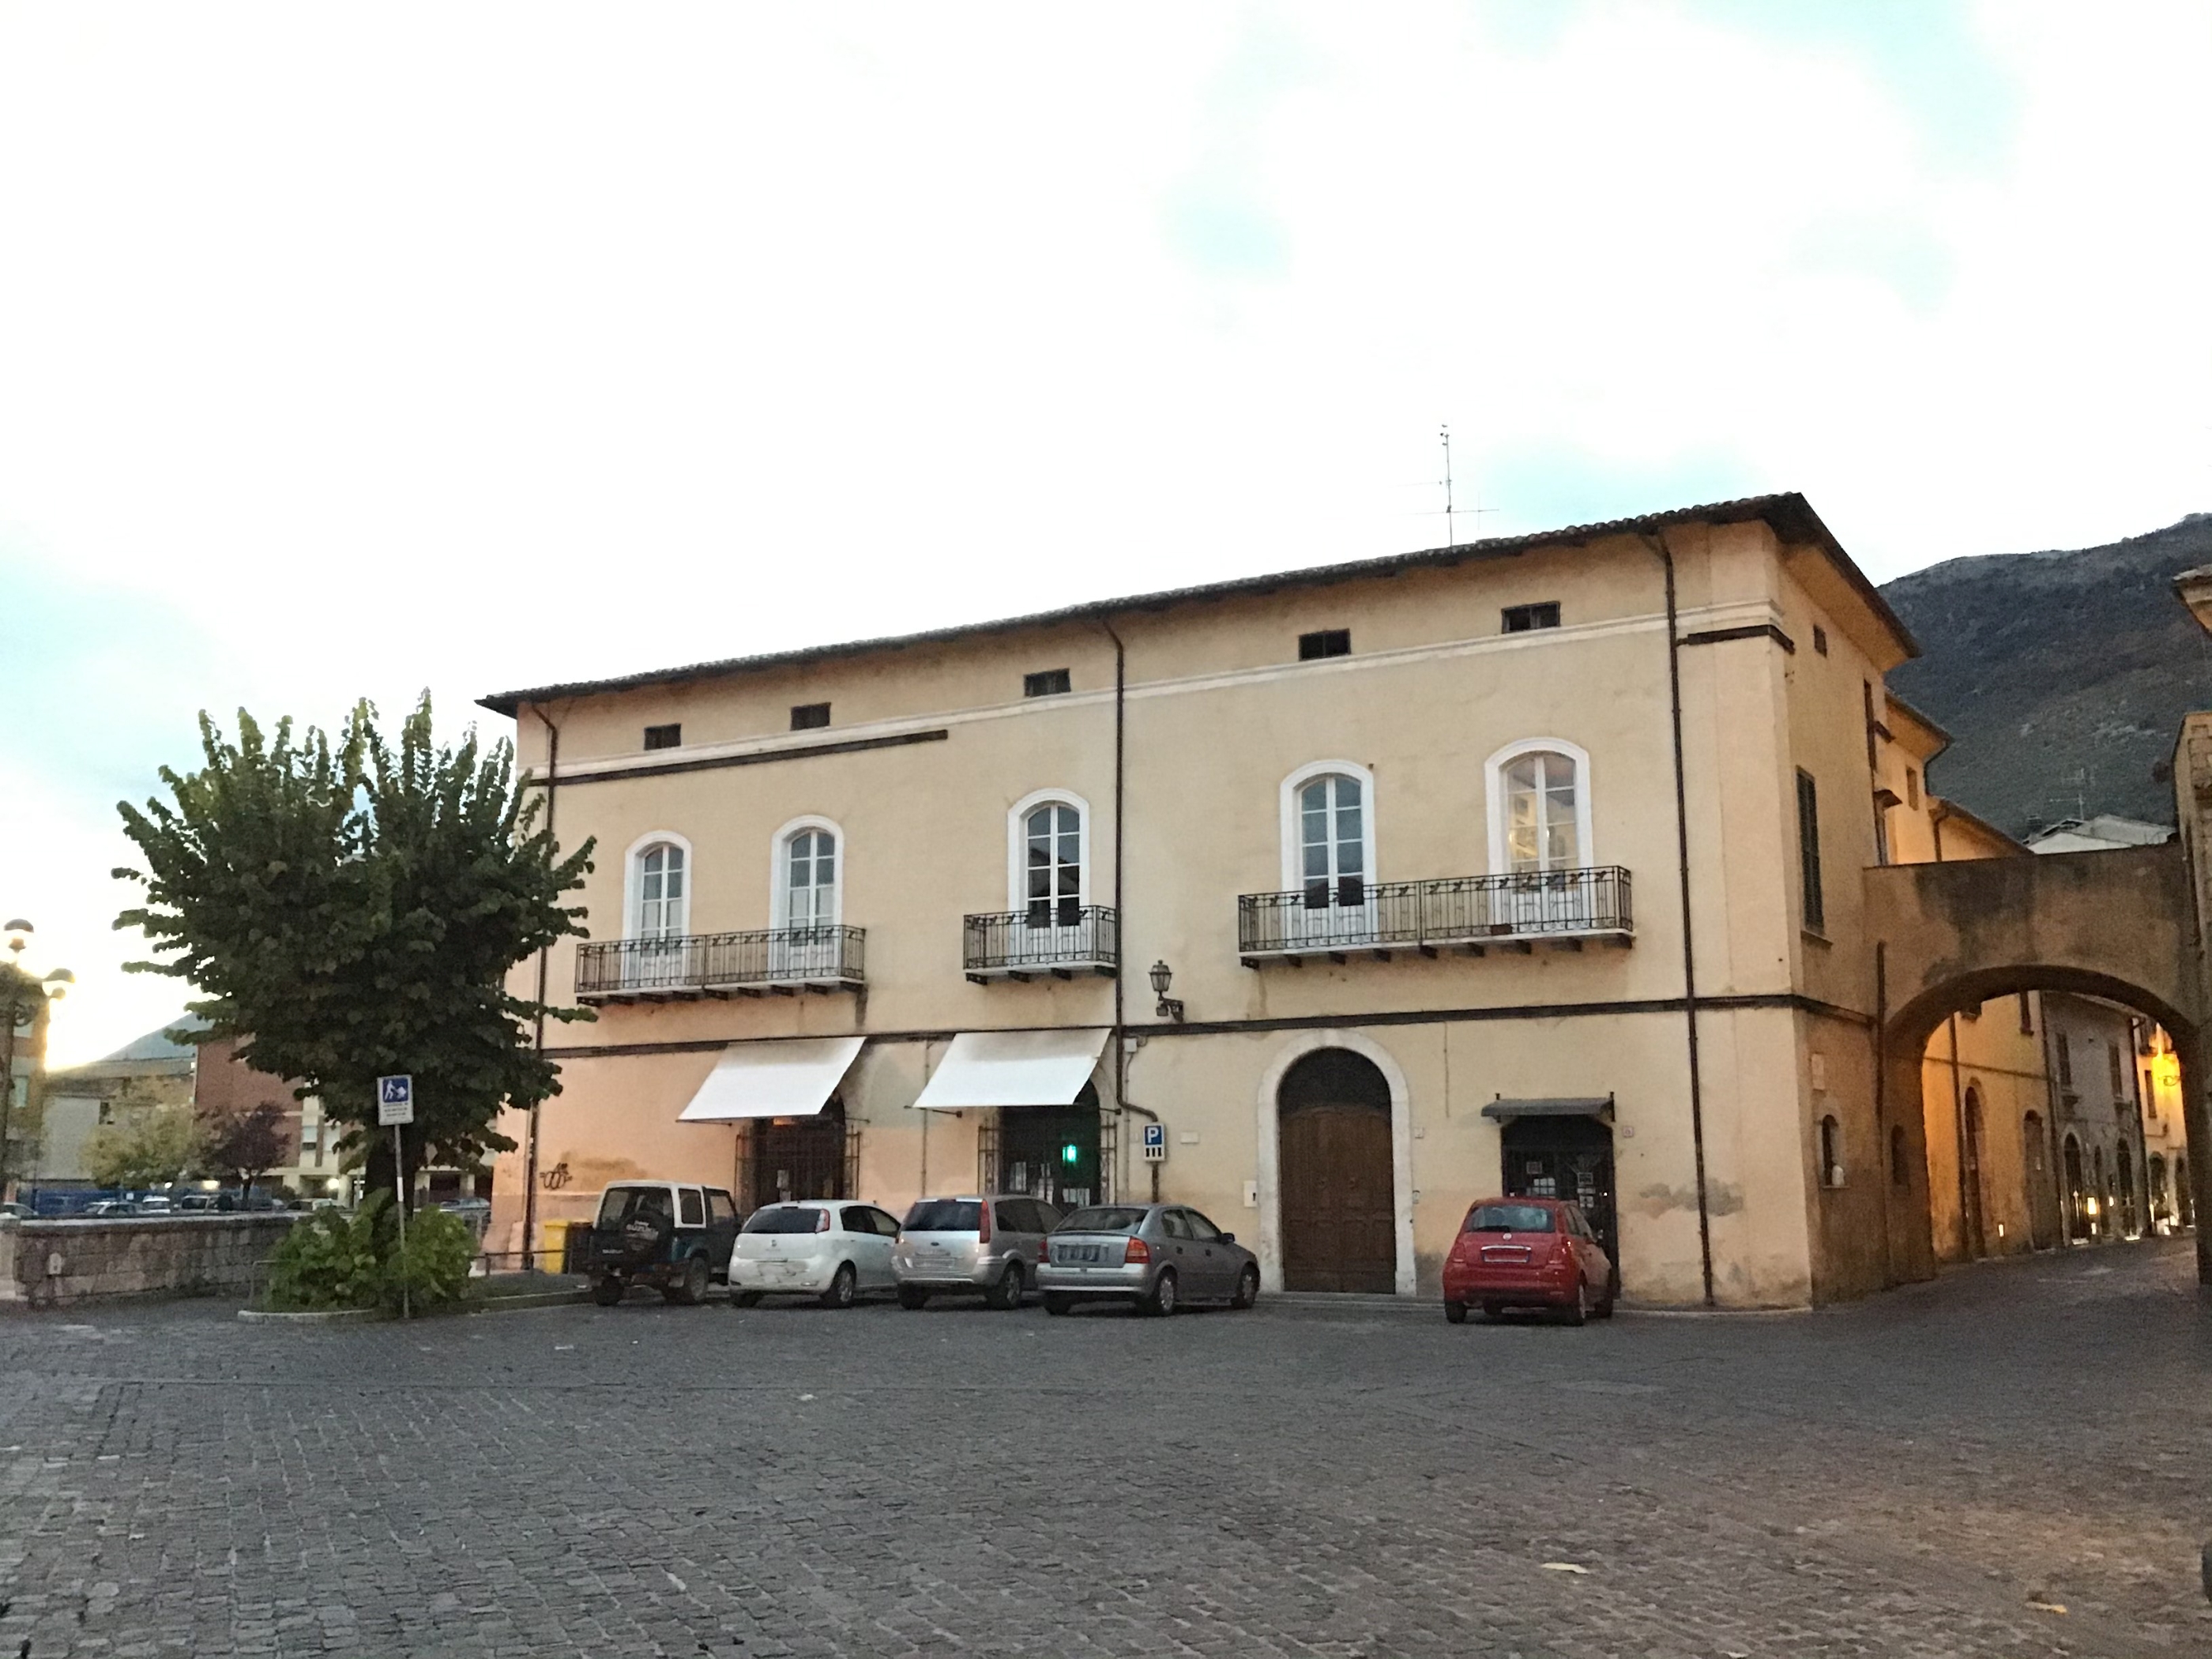 Palazzo Marsella (palazzo) - Sora (FR)  (XIII; XVIII)